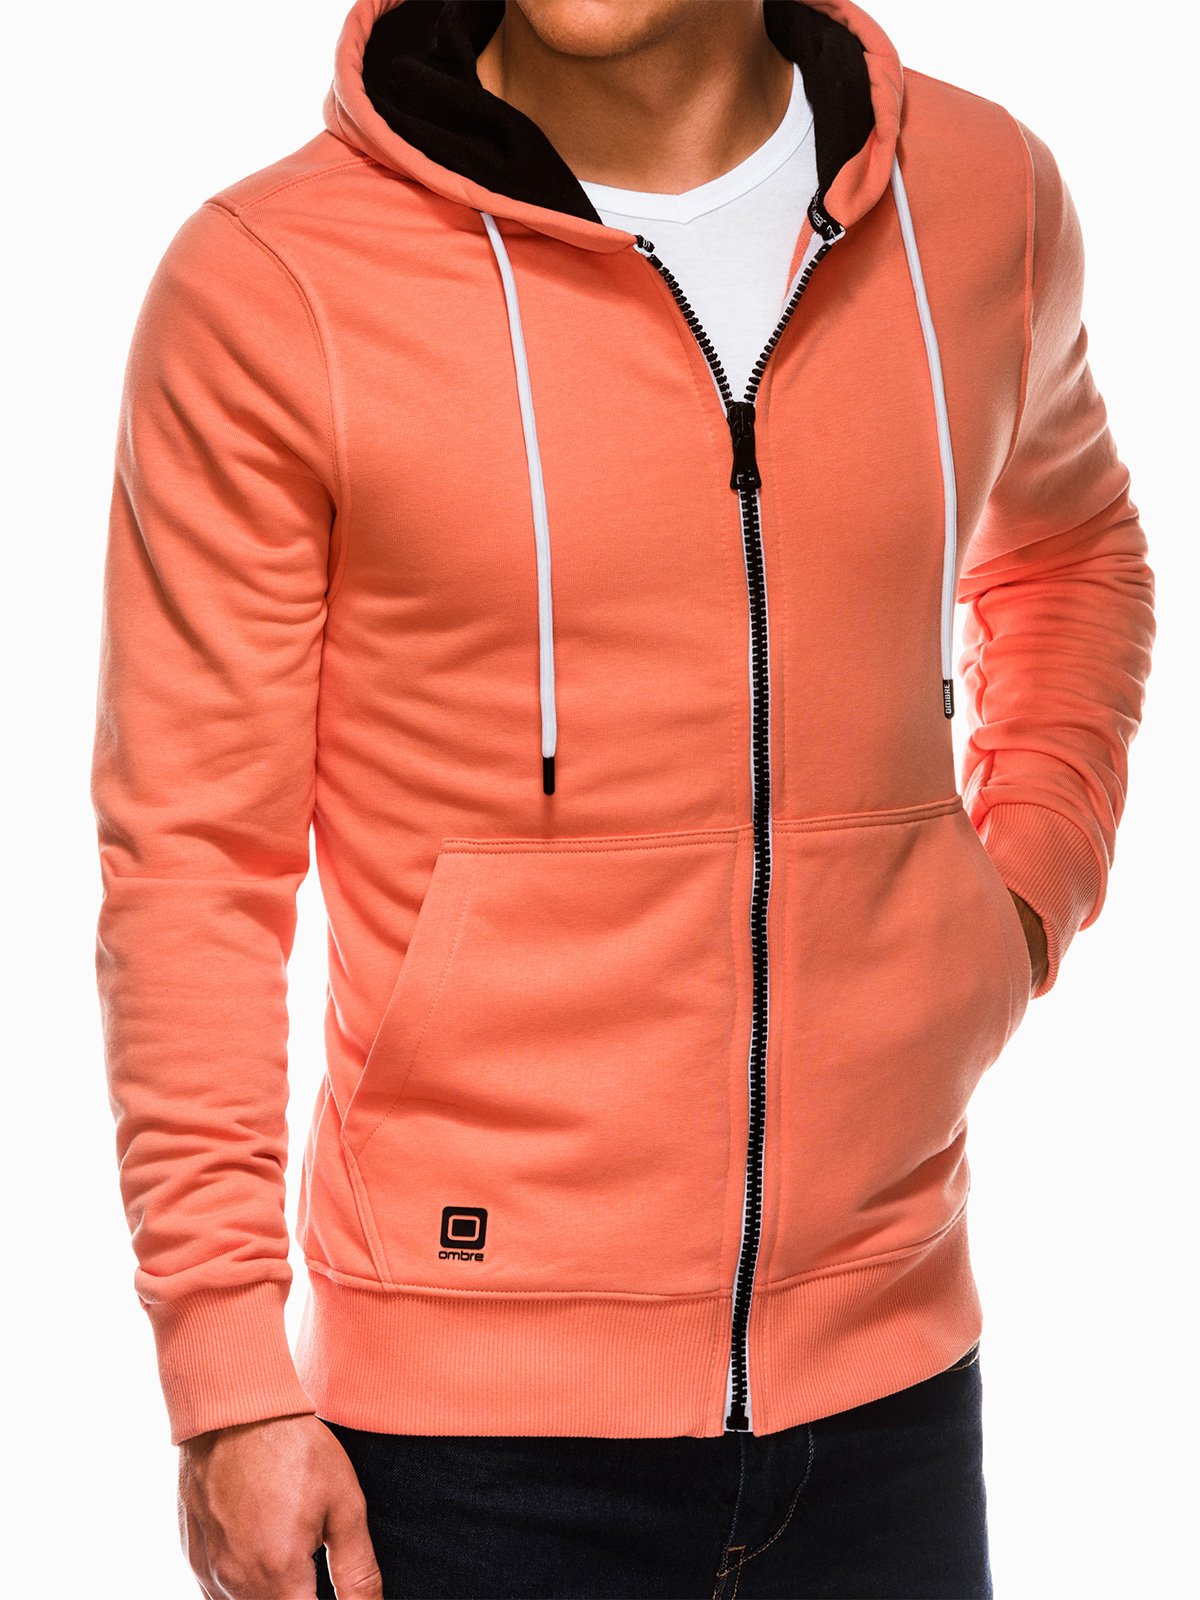 Men's zip-up sweatshirt B976 - peach | MODONE wholesale - Clothing For Men